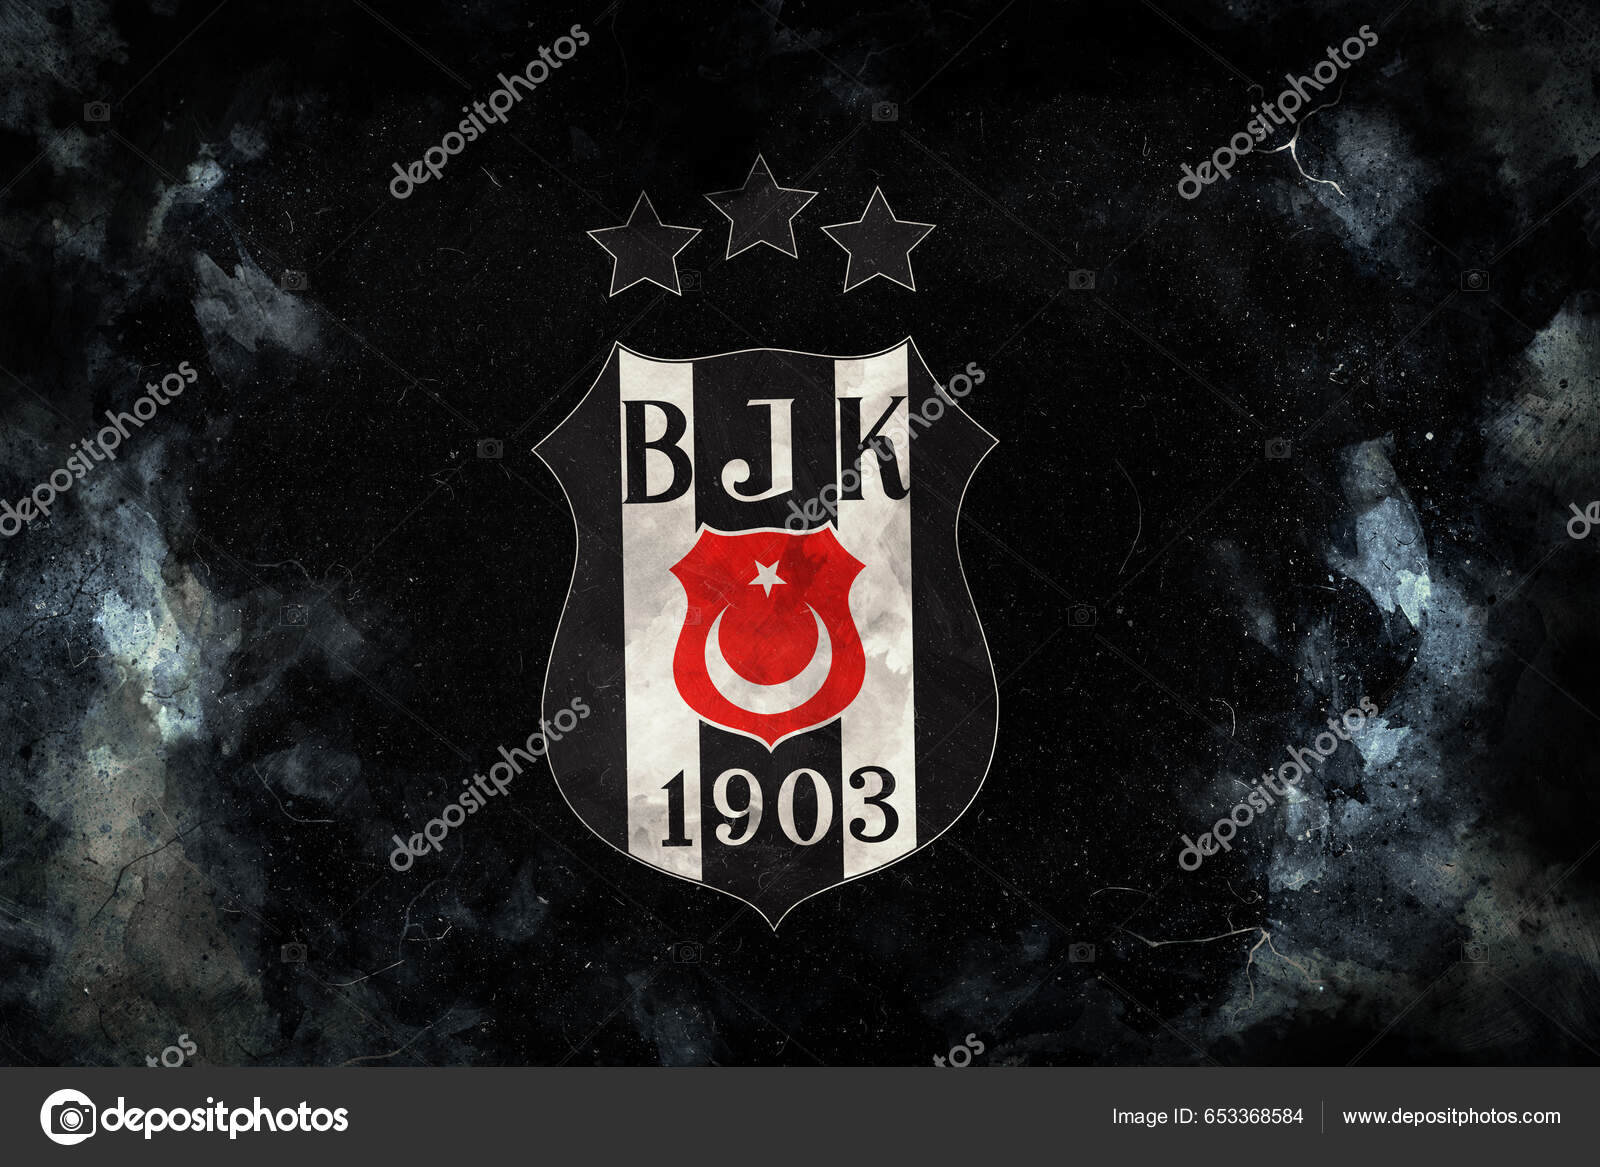 Besiktas Football Club Bjk Logo – Stock Editorial Photo